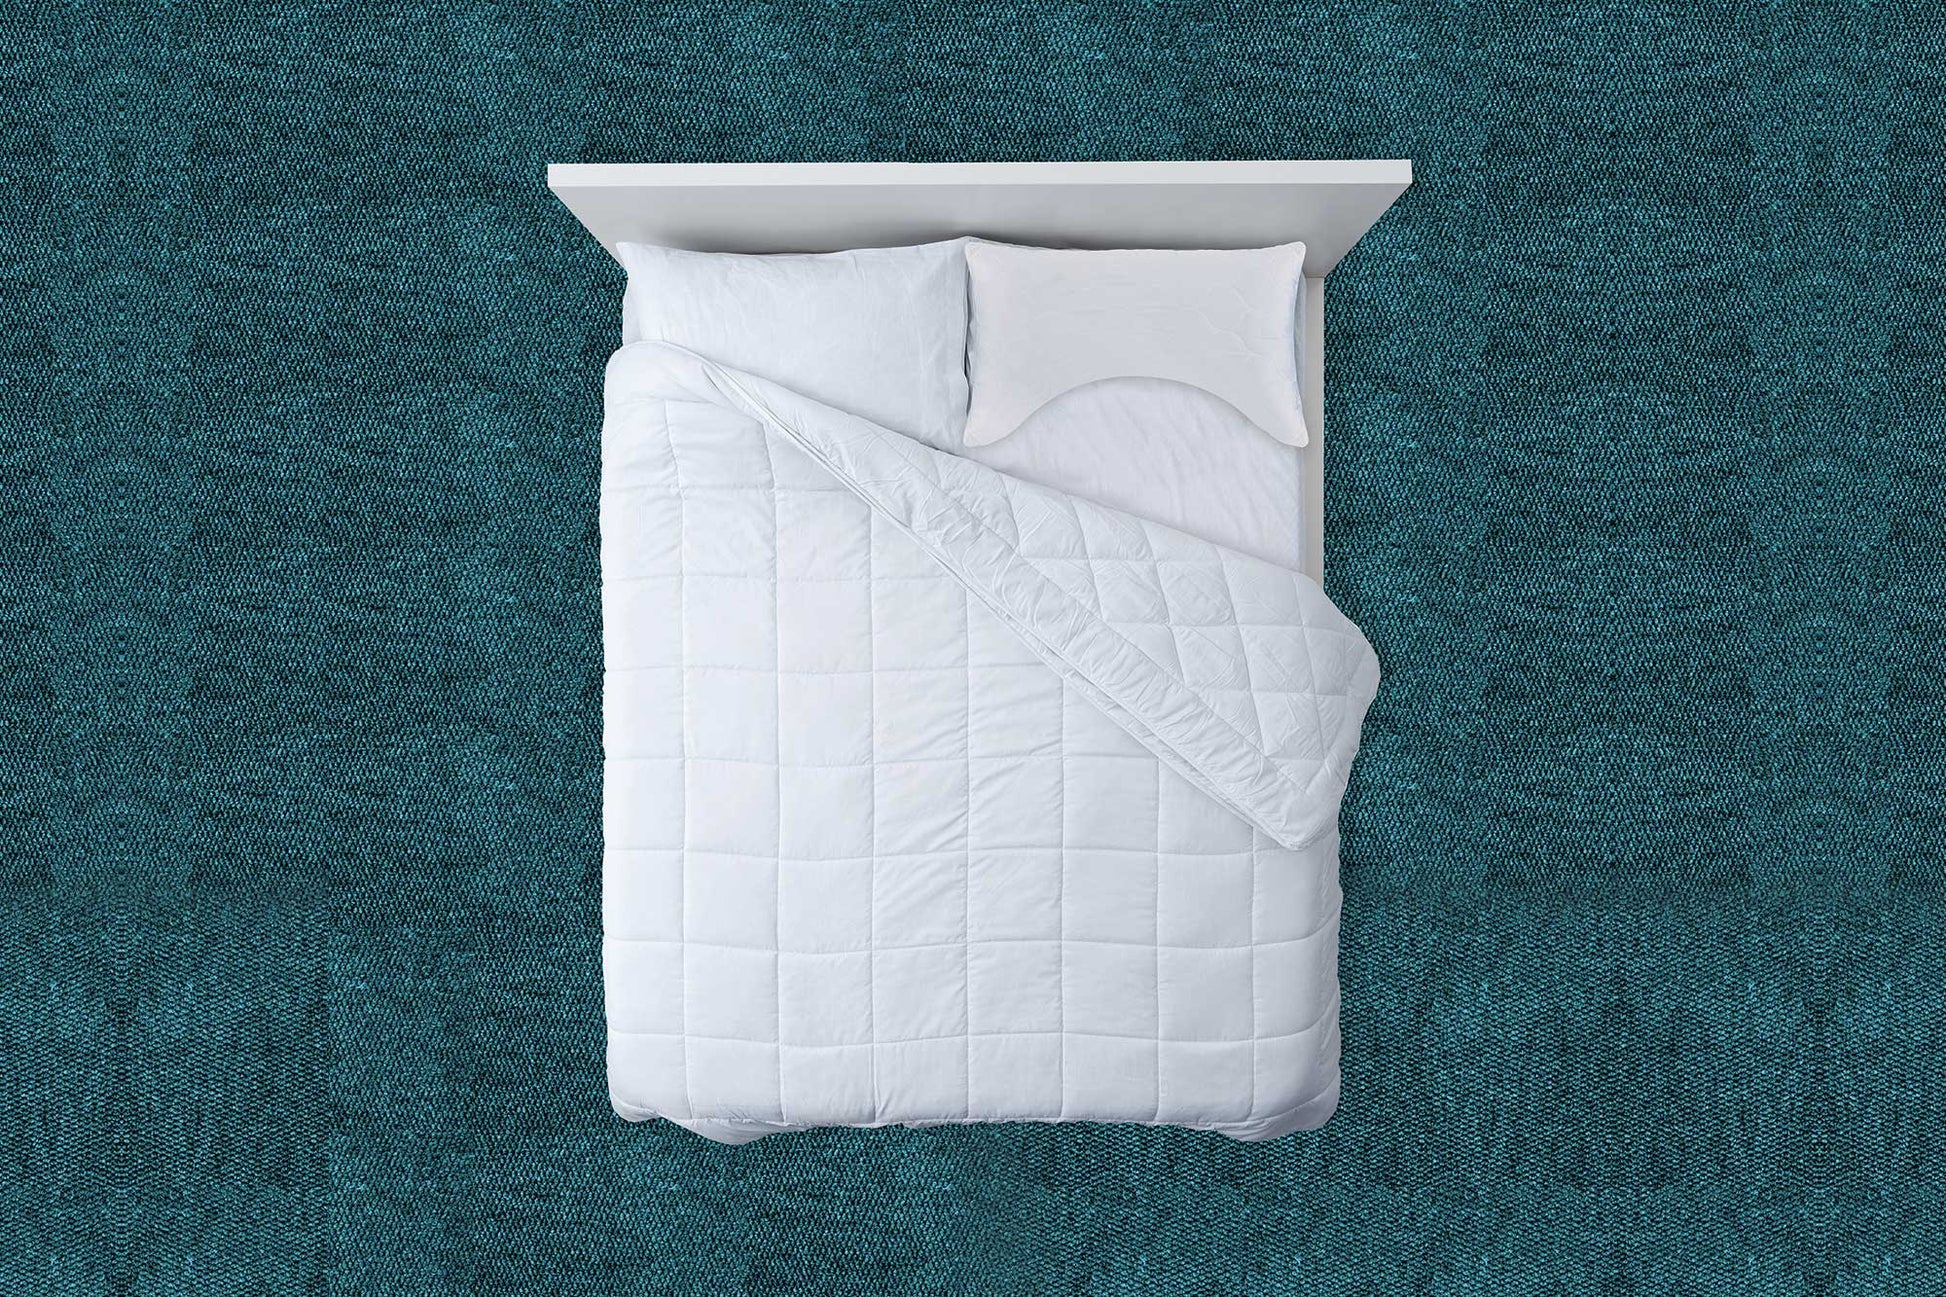 Pillows myWoolly® Side Pillow by Sleep & Beyond Sleep & Beyond